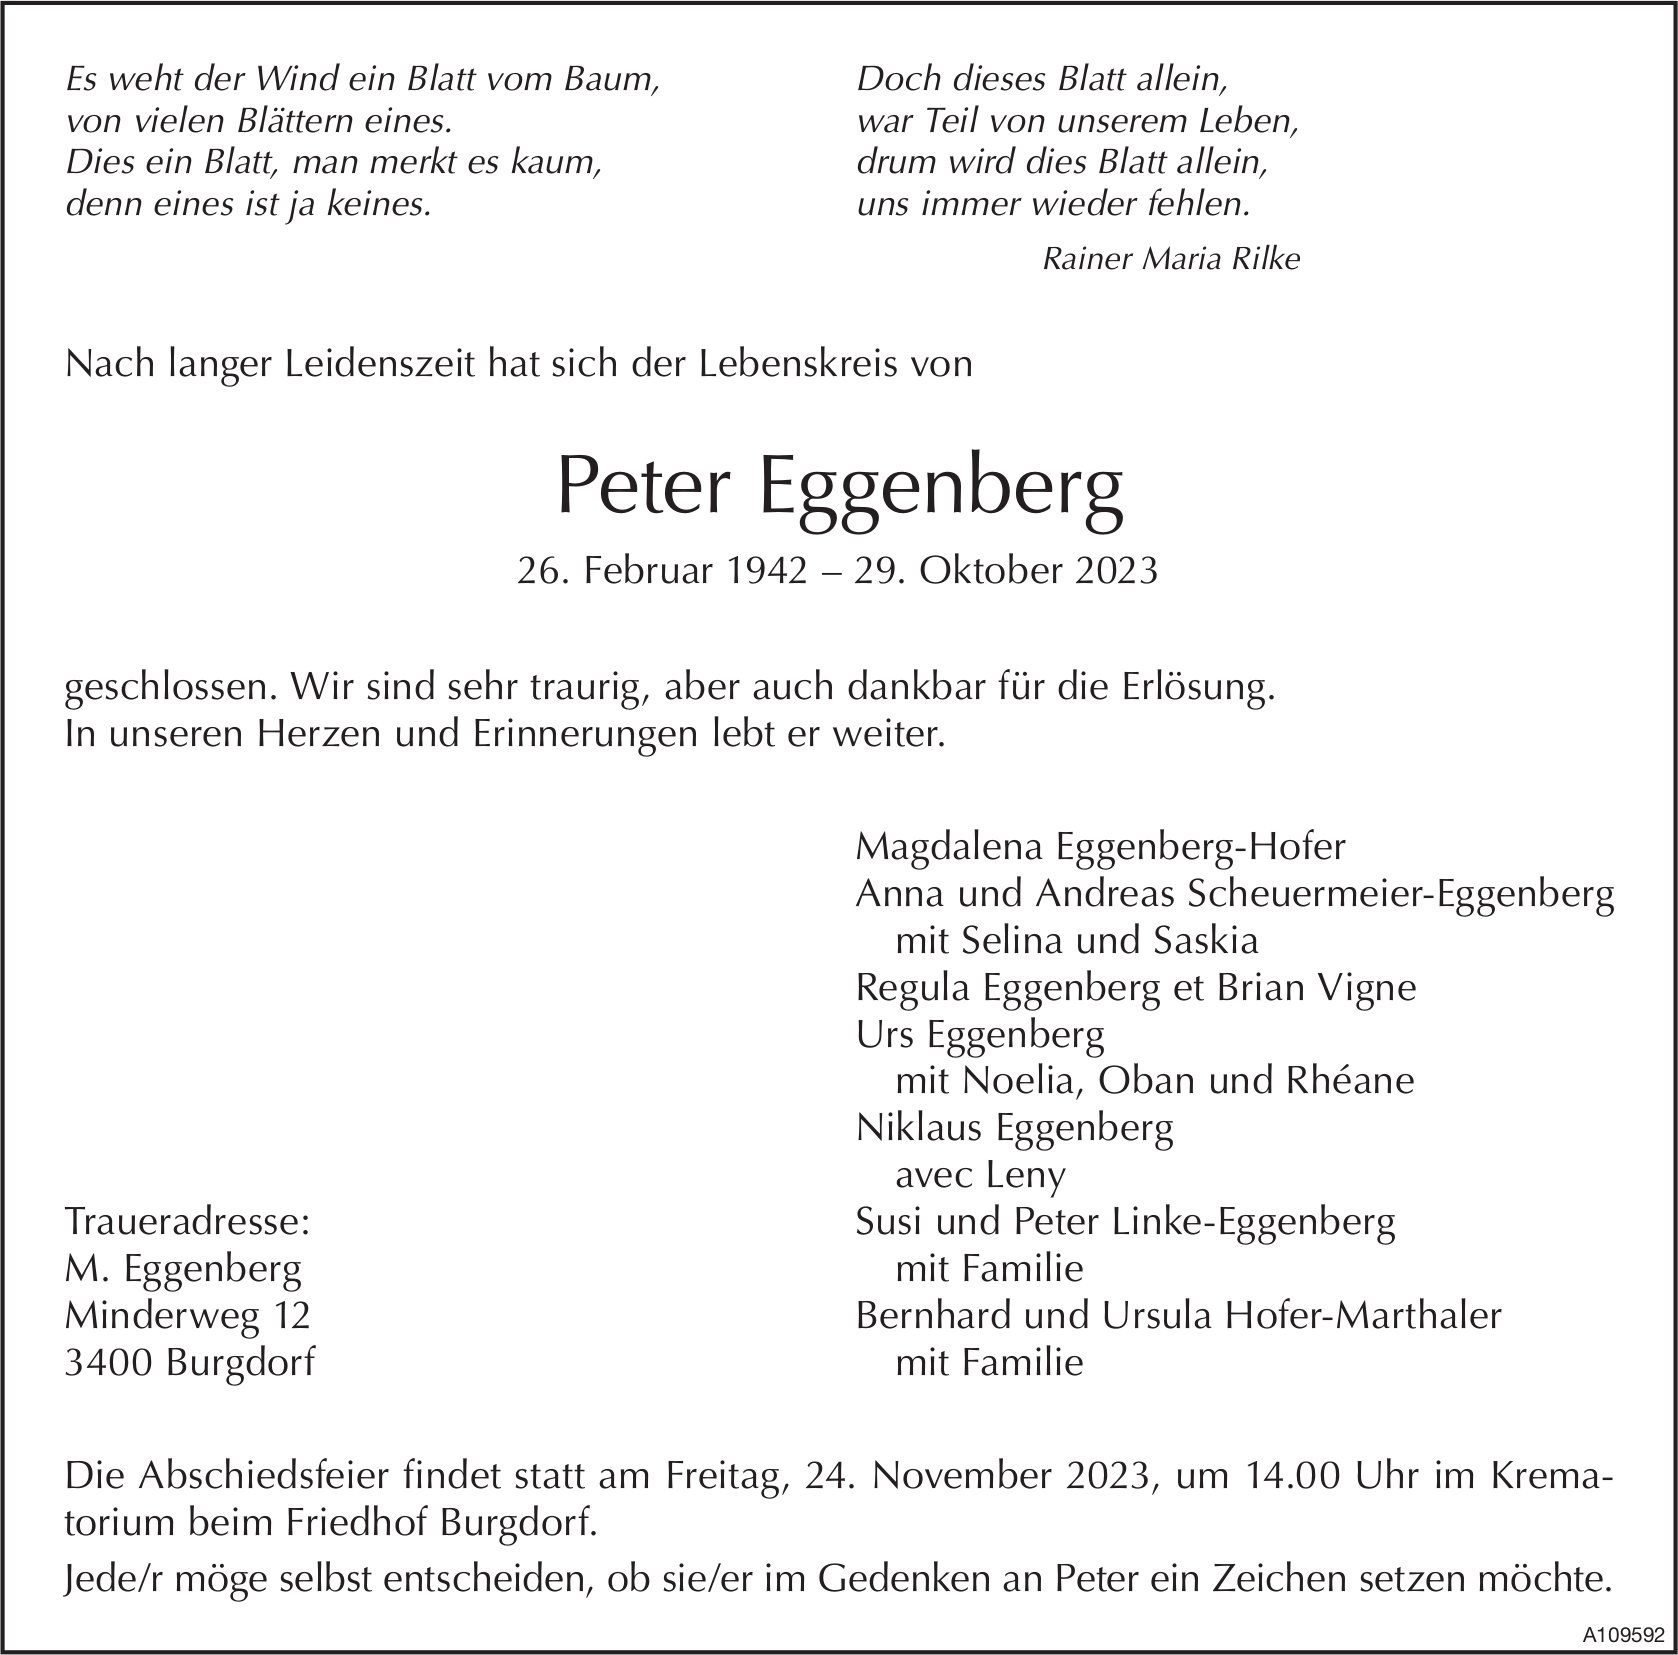 Peter Eggenberg, Oktober 2023 / TA